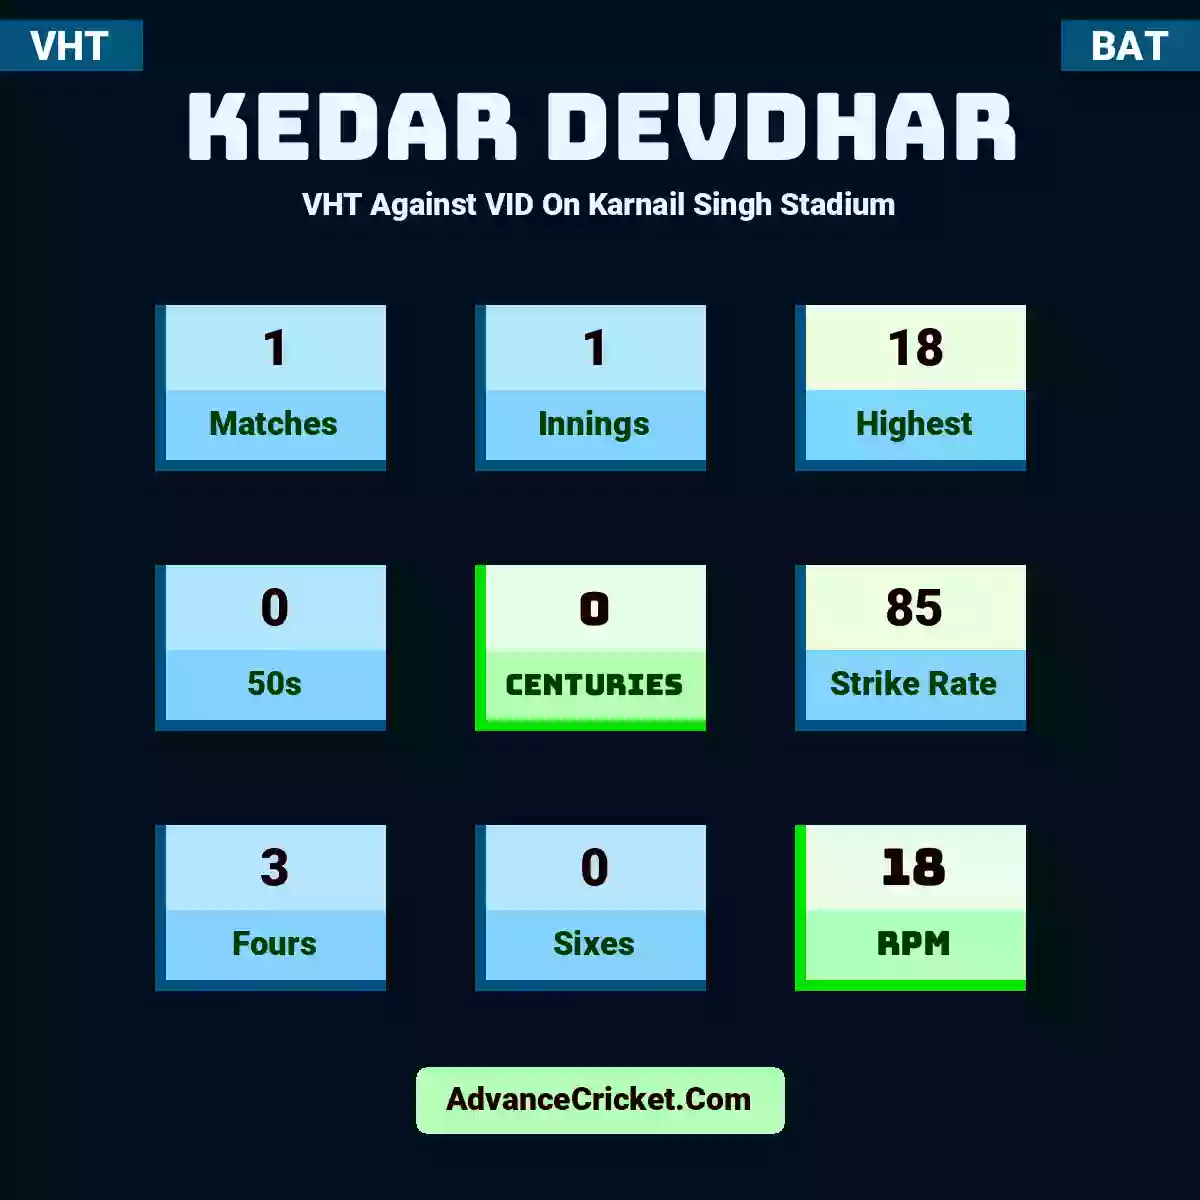 Kedar Devdhar VHT  Against VID On Karnail Singh Stadium, Kedar Devdhar played 1 matches, scored 18 runs as highest, 0 half-centuries, and 0 centuries, with a strike rate of 85. K.Devdhar hit 3 fours and 0 sixes, with an RPM of 18.